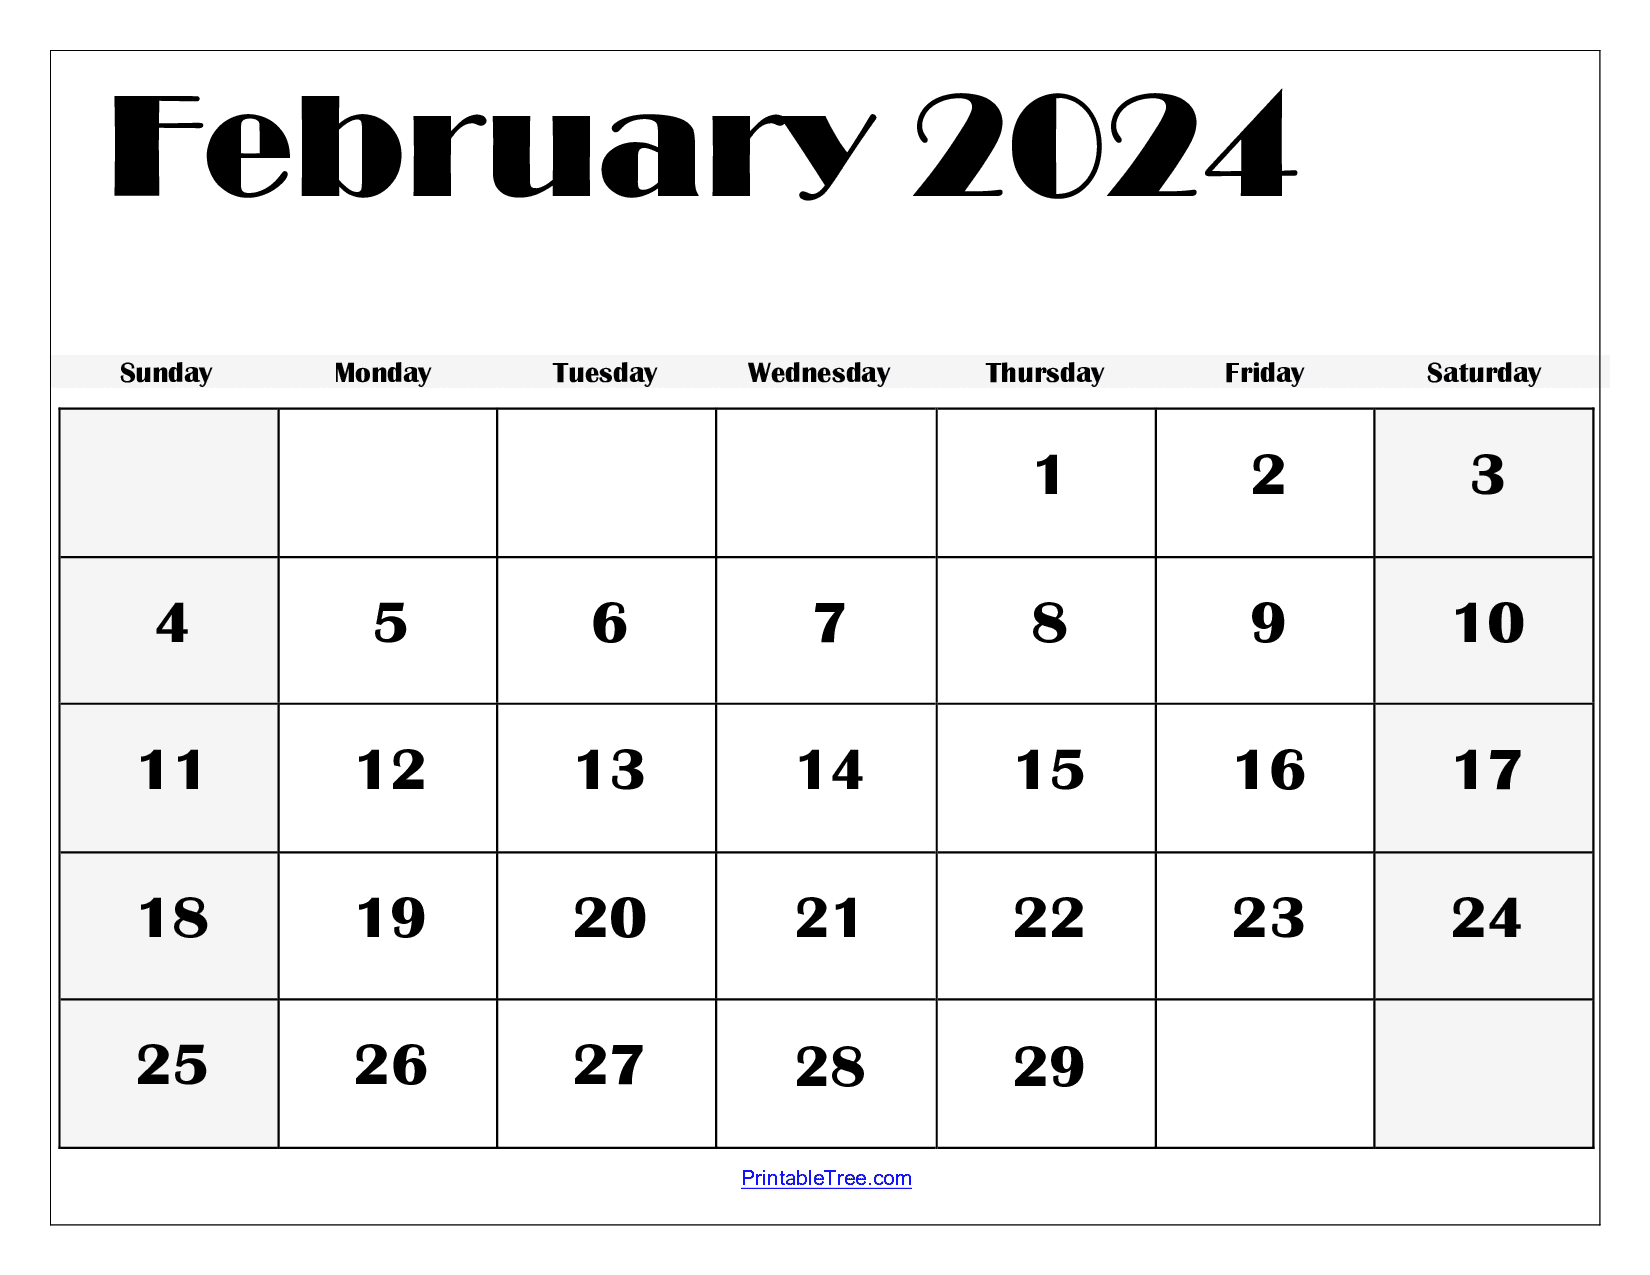 February 2024 Calendar Printable Pdf Template With Holidays for Calendar February 2024 Free Printable